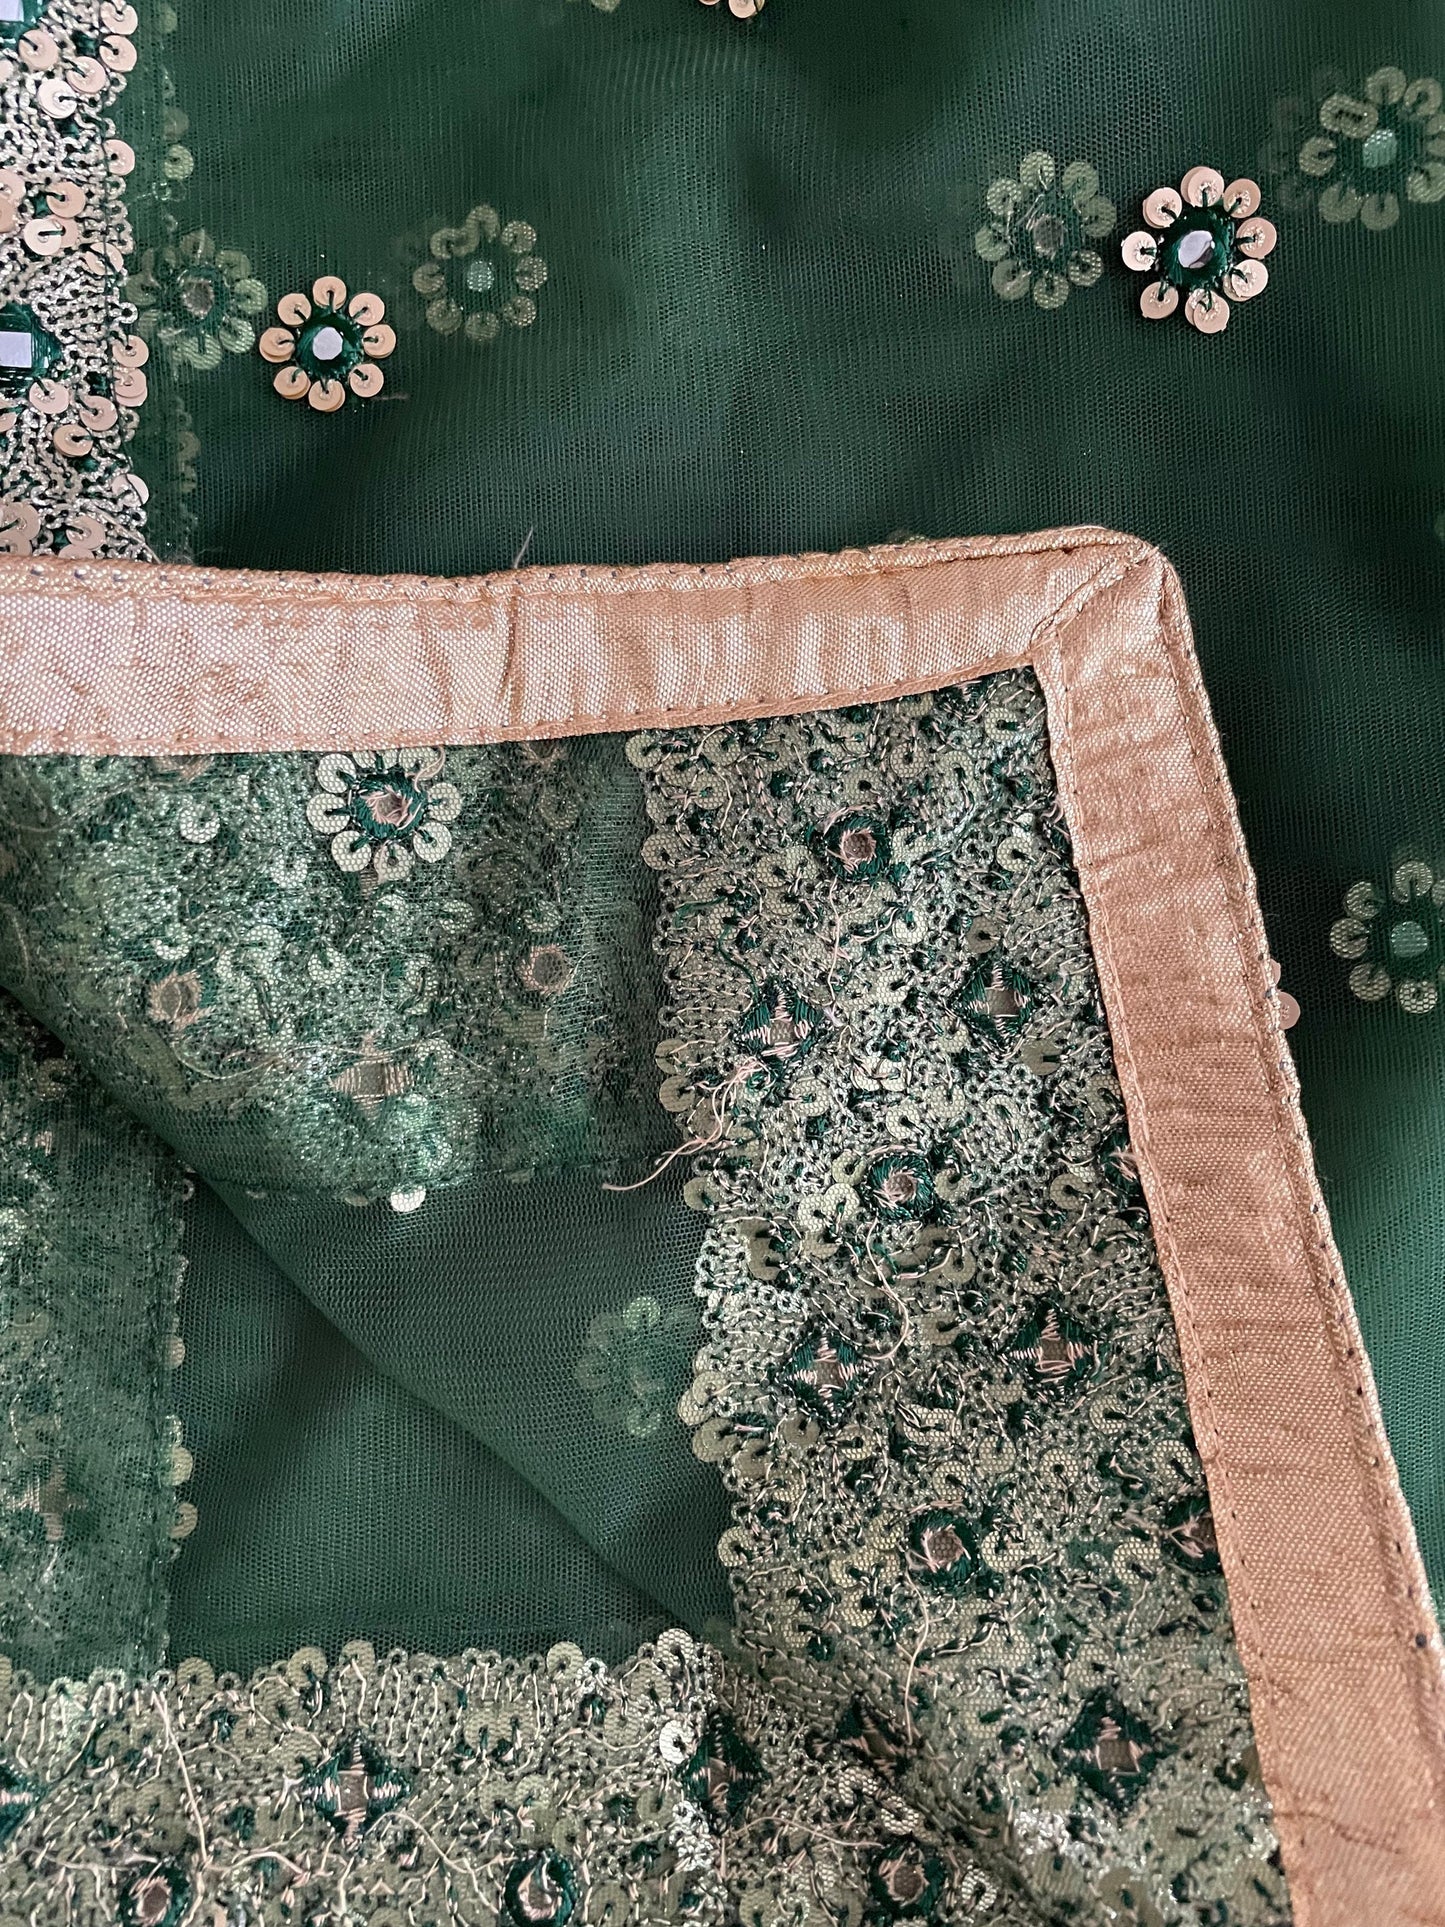 Green Net Duppattas Broad Sequin cluster faux mirror work border Scarf Chunni Chunri Odhni Weddings Karwachauth Diwali Dressing